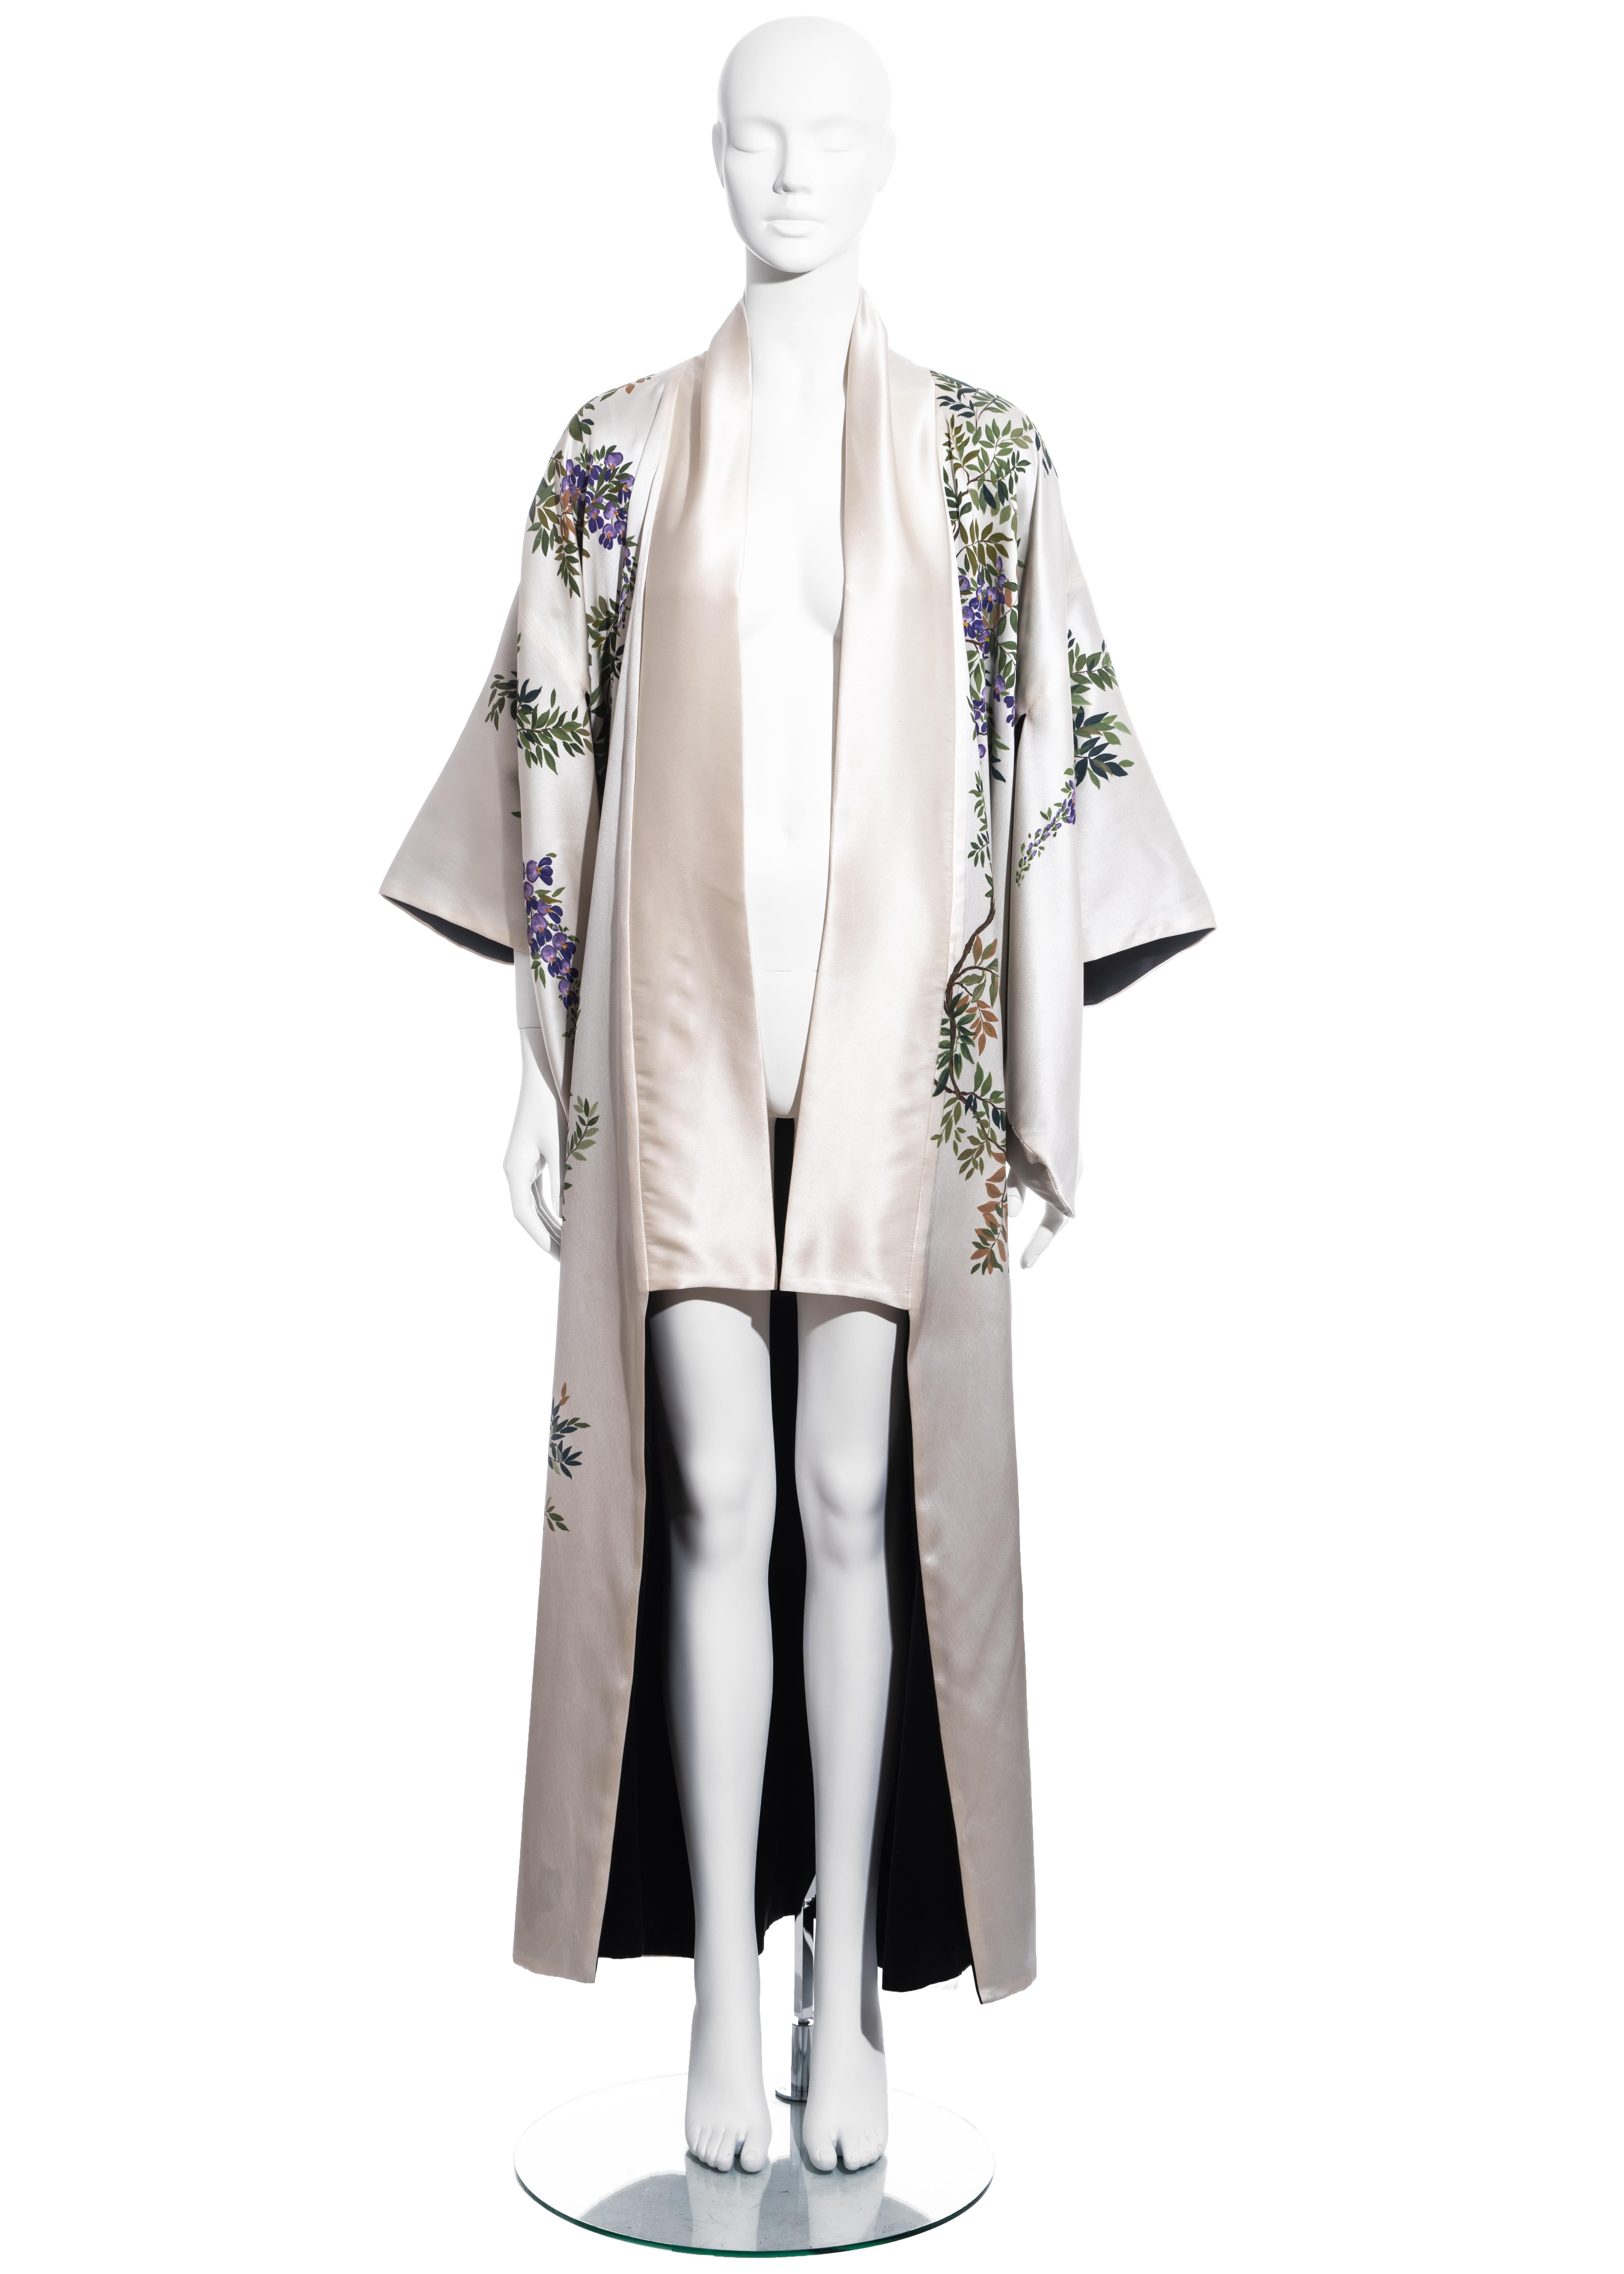 ▪ Dolce & Gabbana ivory kimono dress coat
▪ 65% Silk, 35% Nylon
▪ Hand-painted design of flowers and birds  
▪ Black silk lining 
▪ IT 44 - FR 40 - UK 12 - US 8 
▪ Fall-Winter 1998